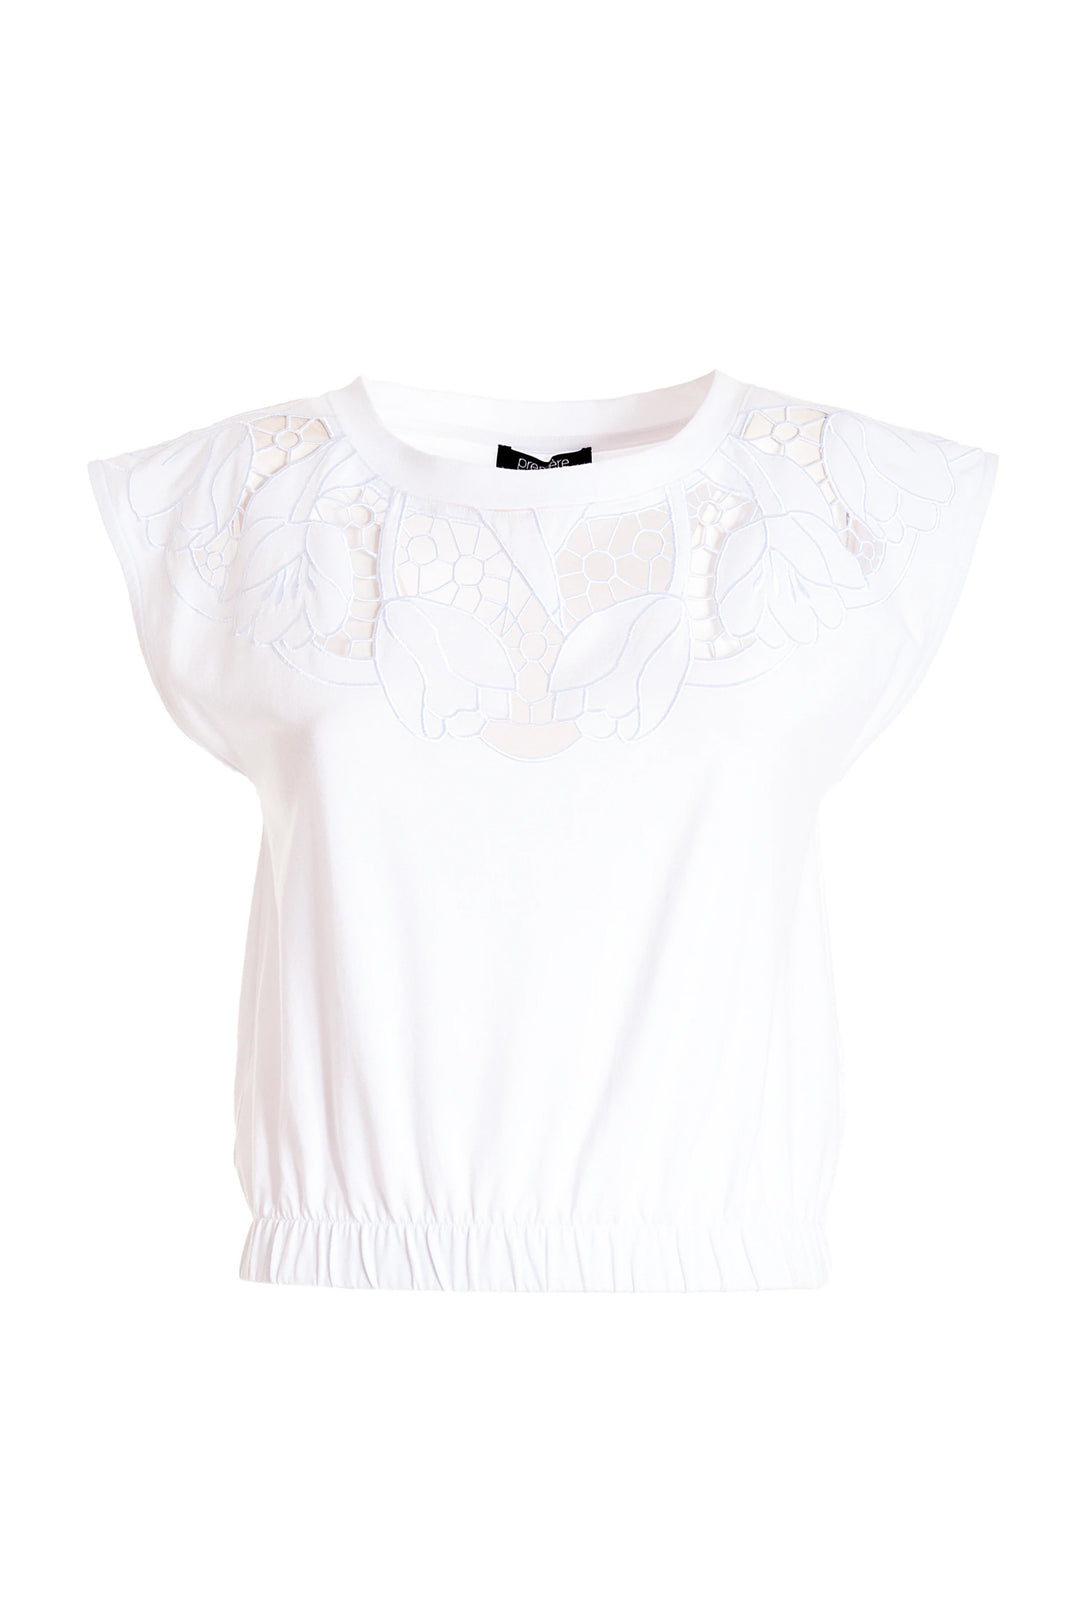 FRACOMINA T-shirt senza maniche con trafori bianca - Mancinelli 1954